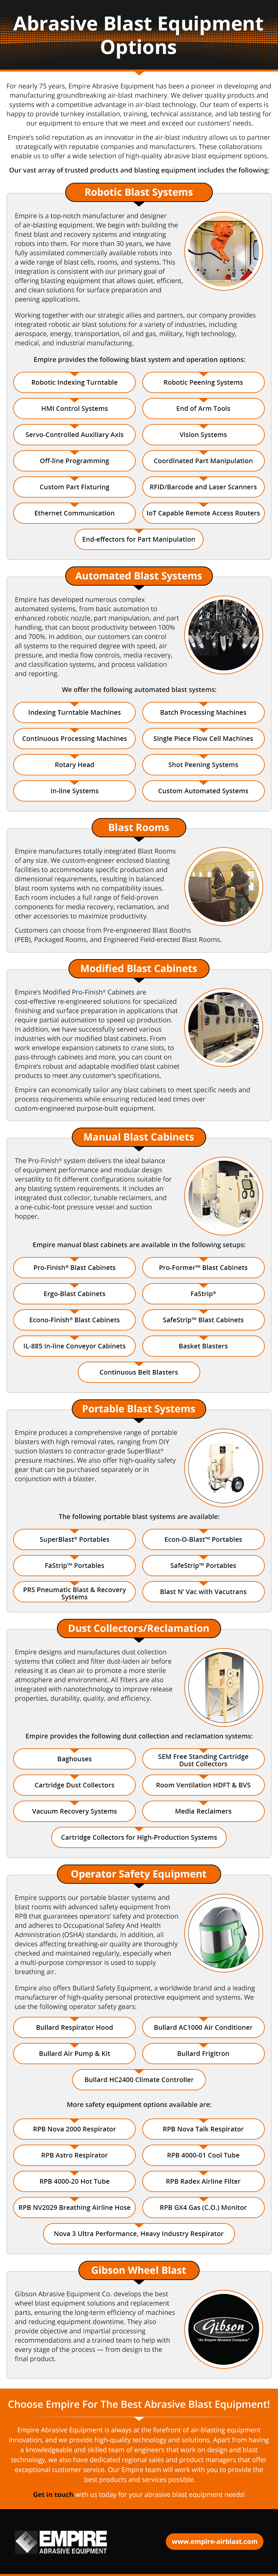 Abrasive Blast Equipment Options Infographic